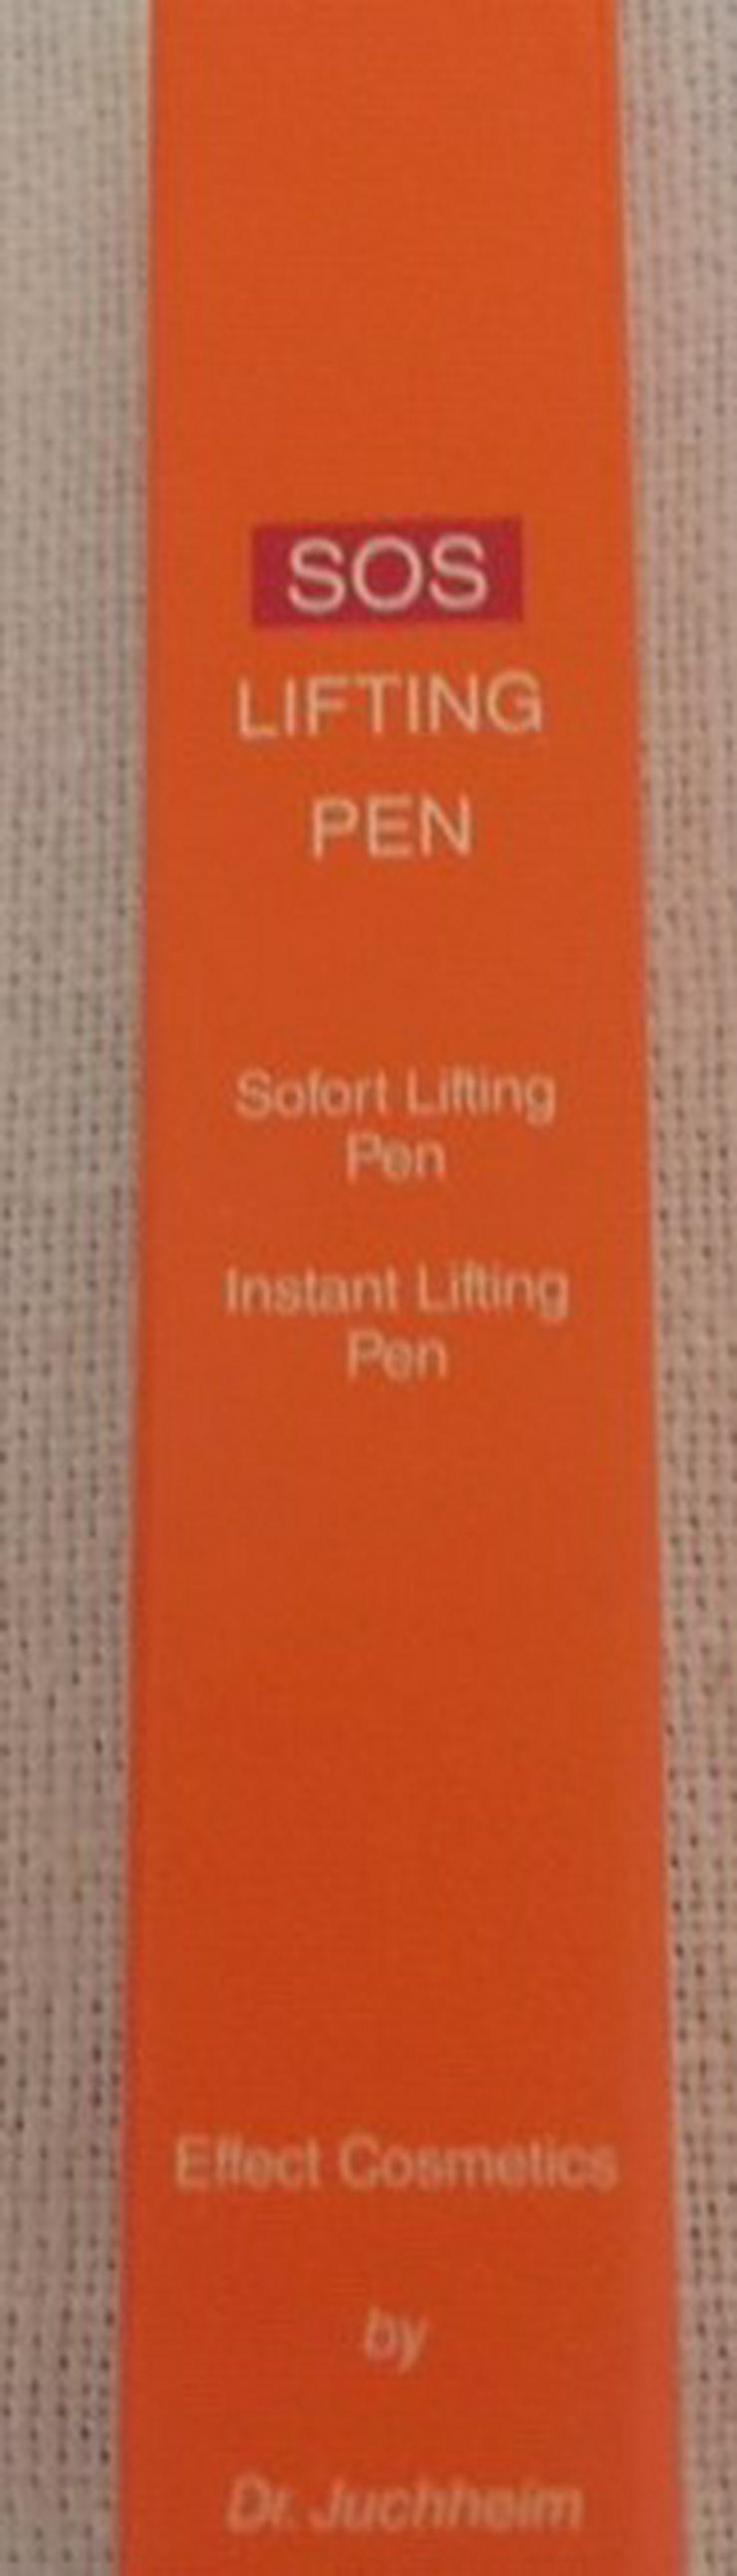 SOS Lifting Pen - Cremes, Pflege & Reinigung - Bild 1